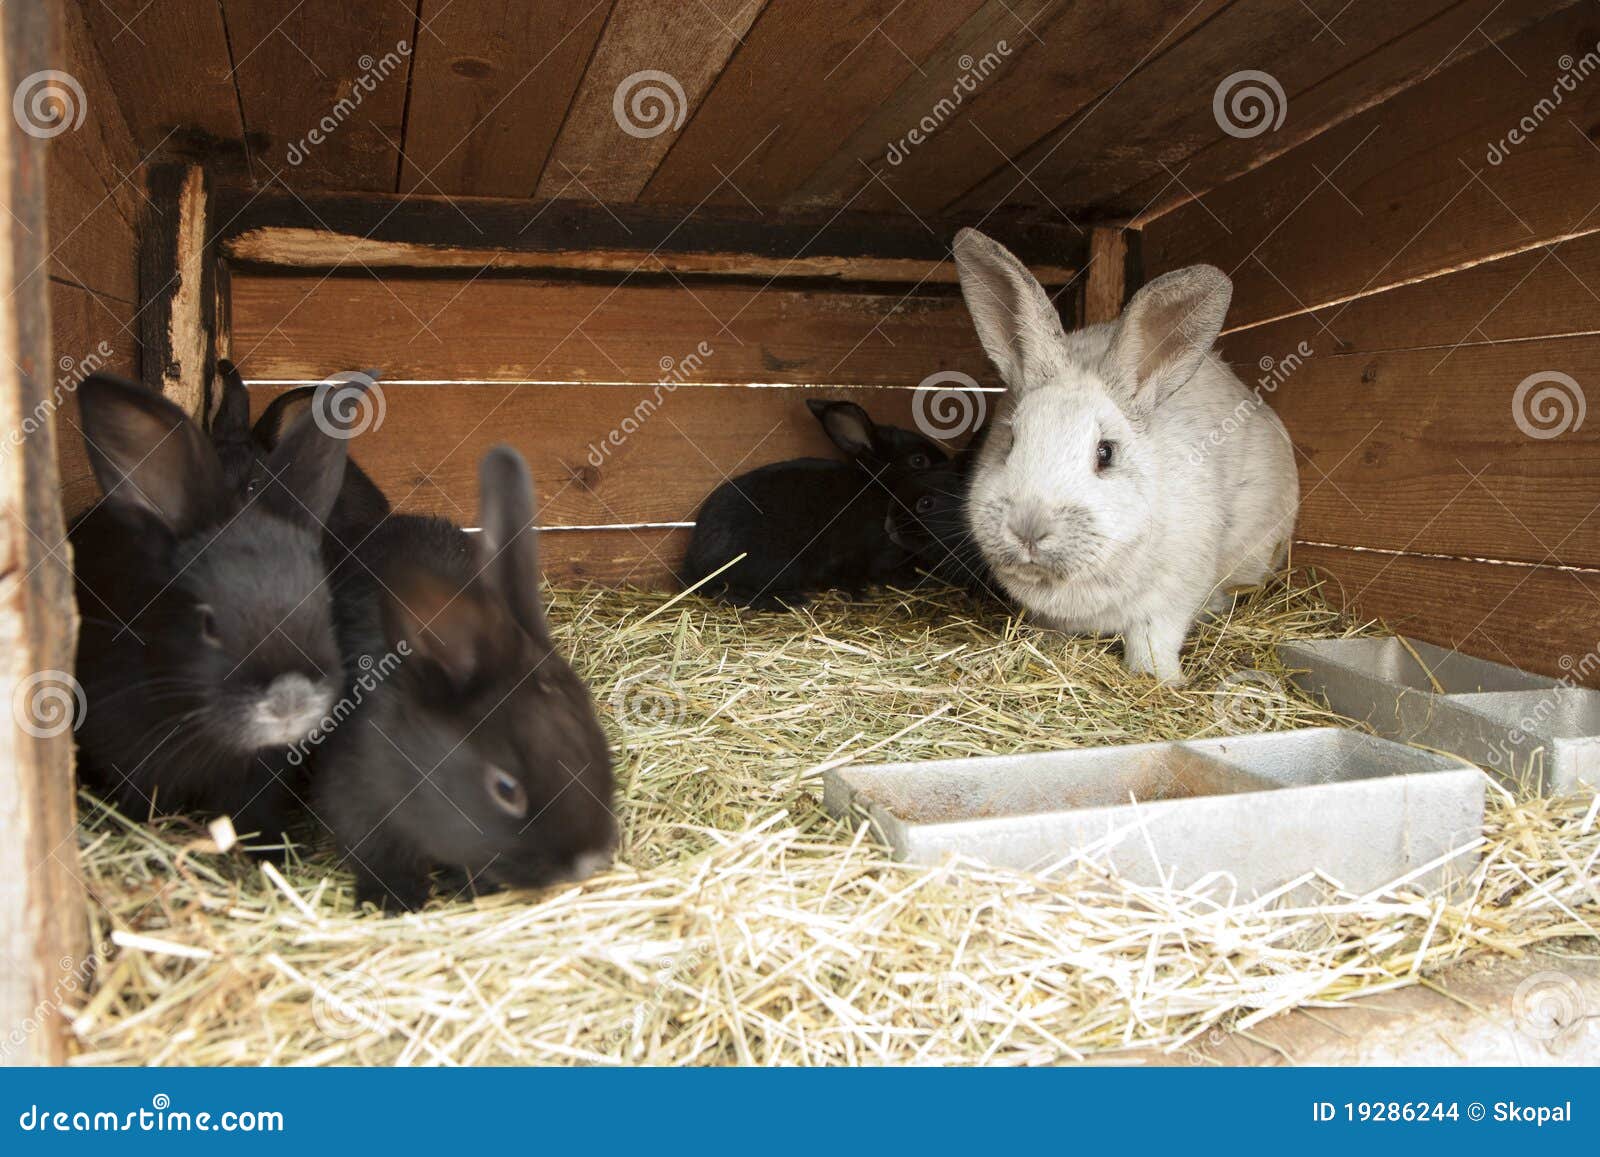 breeding rabbits